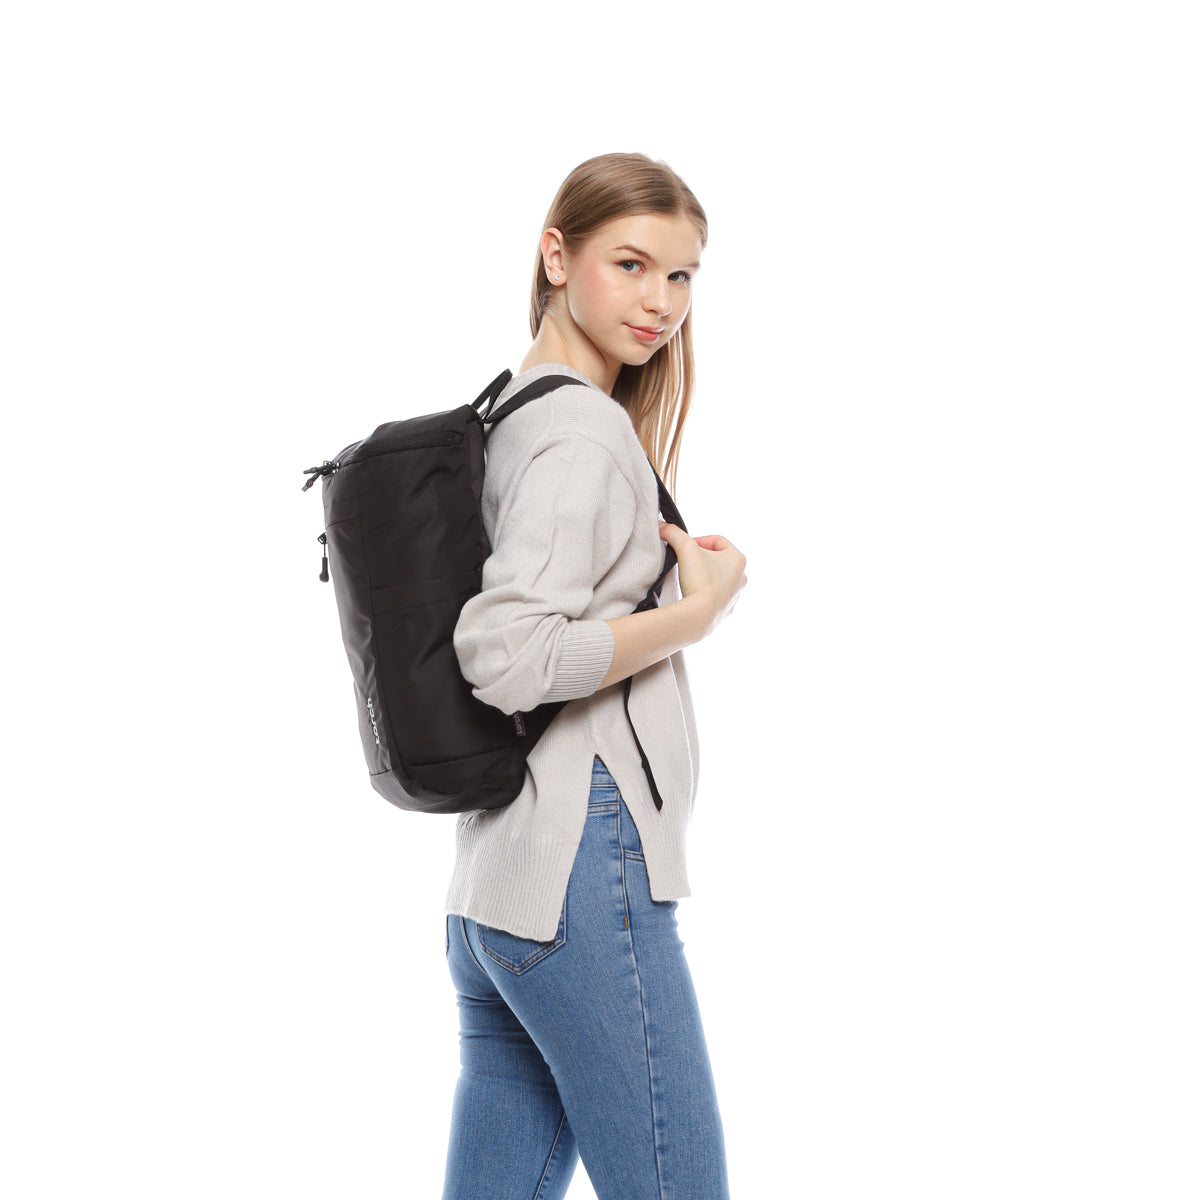 Grihita Backpack